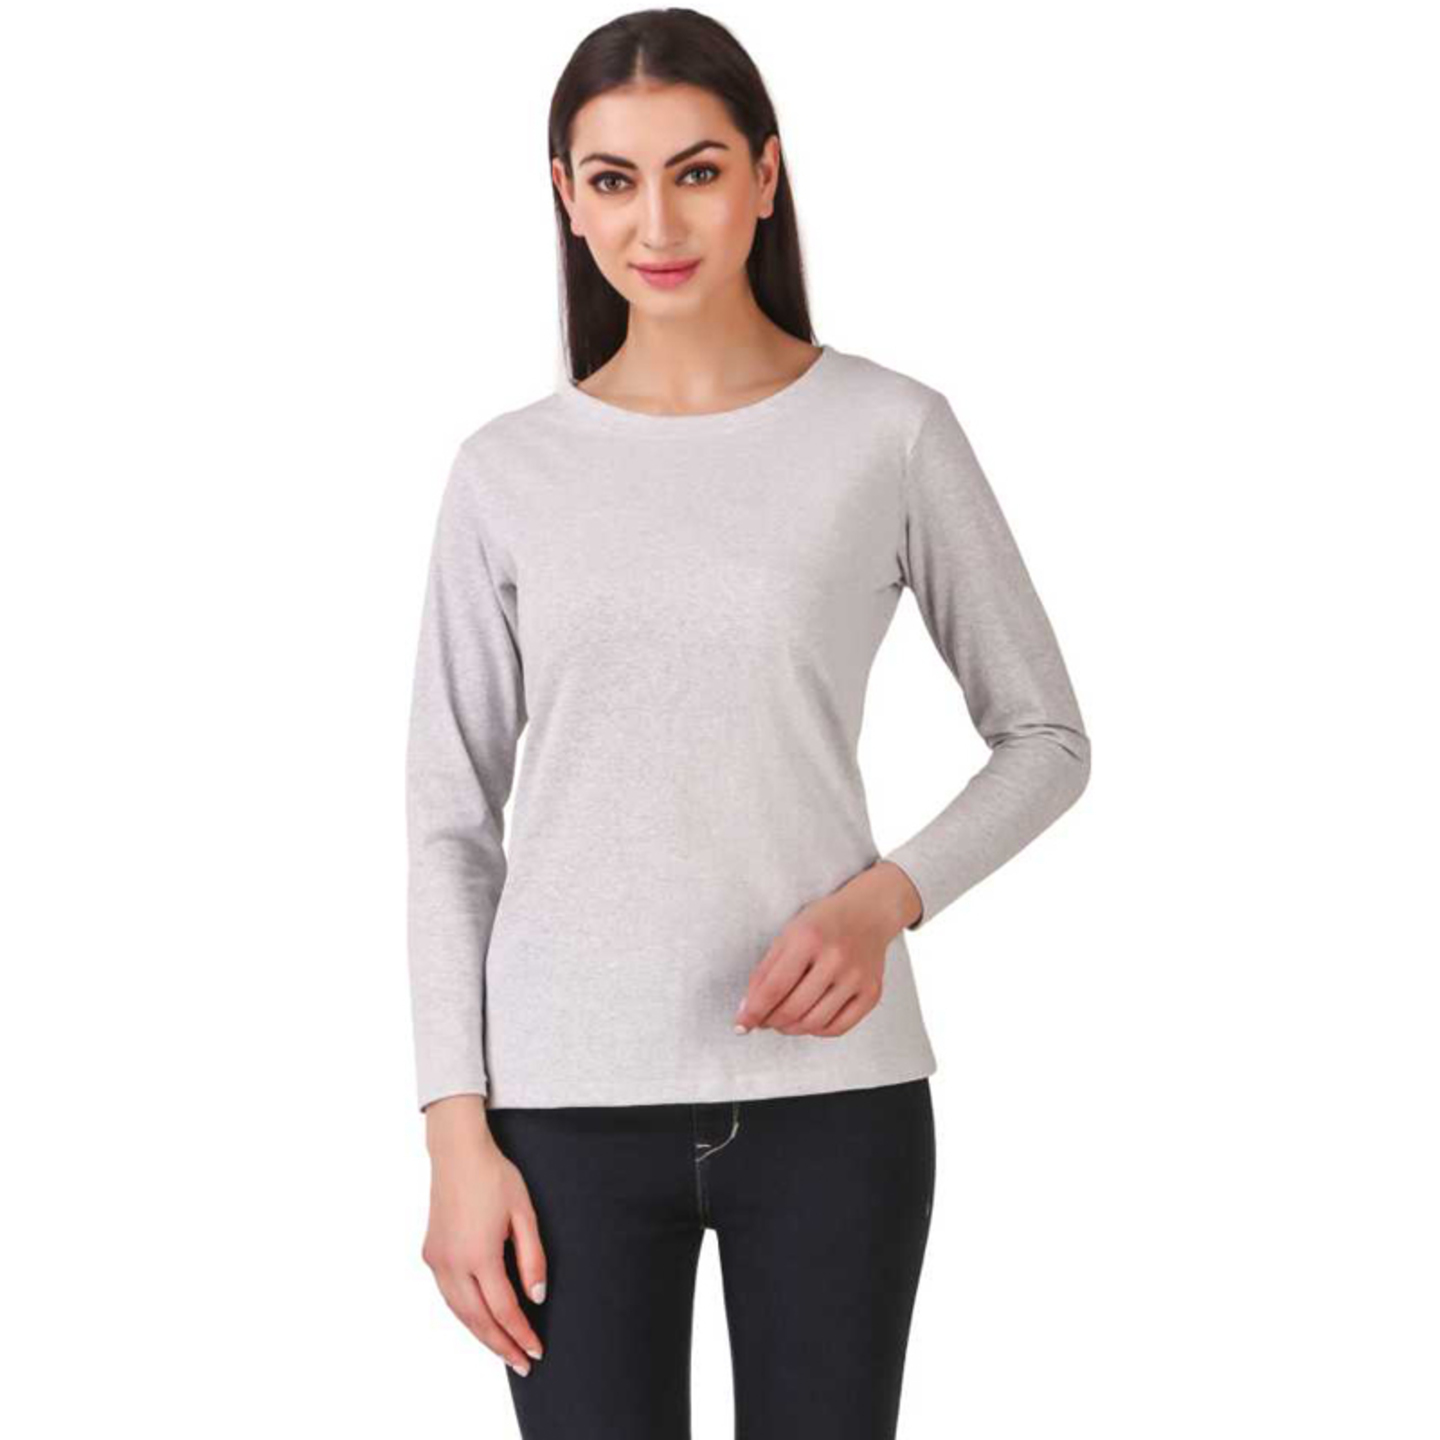 Paretto Light Grey Full Sleeves Cotton T-shirt for Women